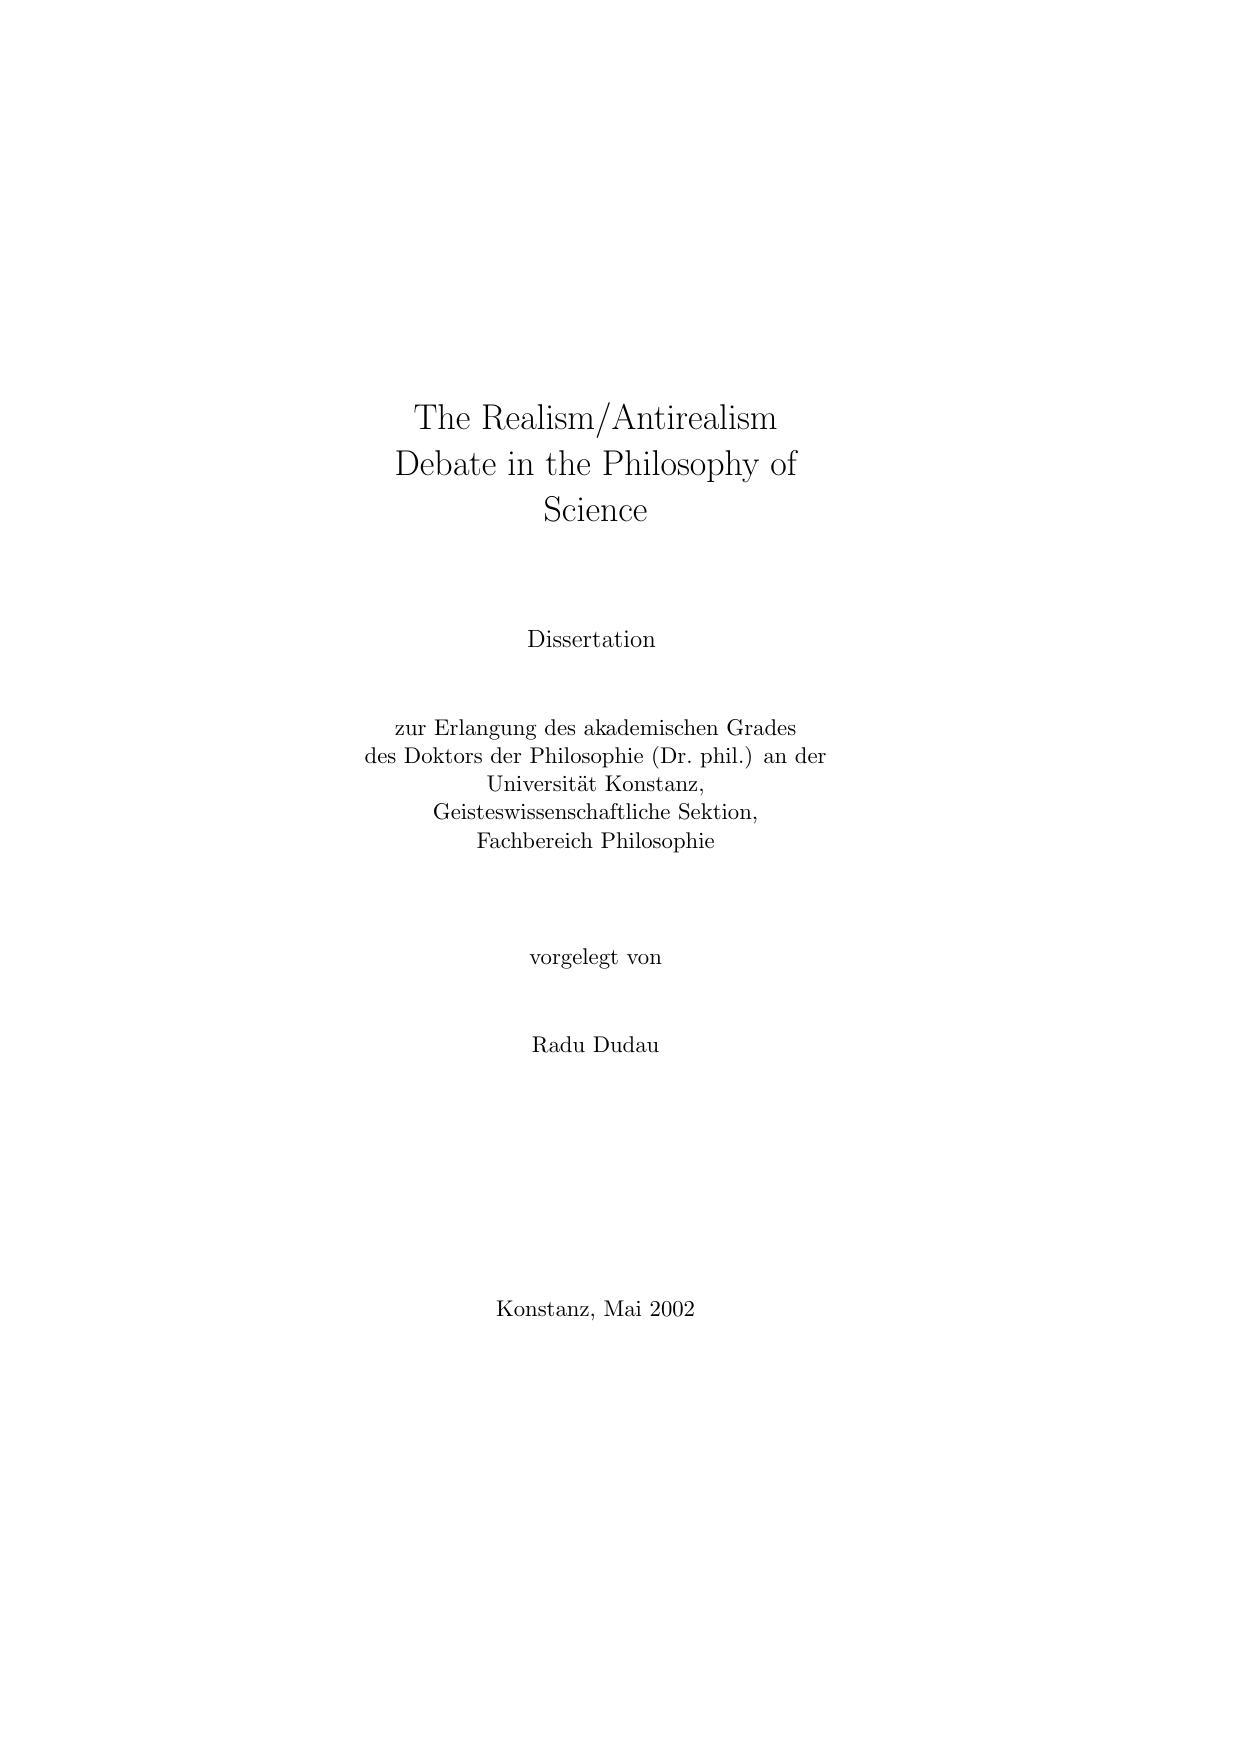 The Realism/antirealism Debate in the Philosophy of Science: Dissertation